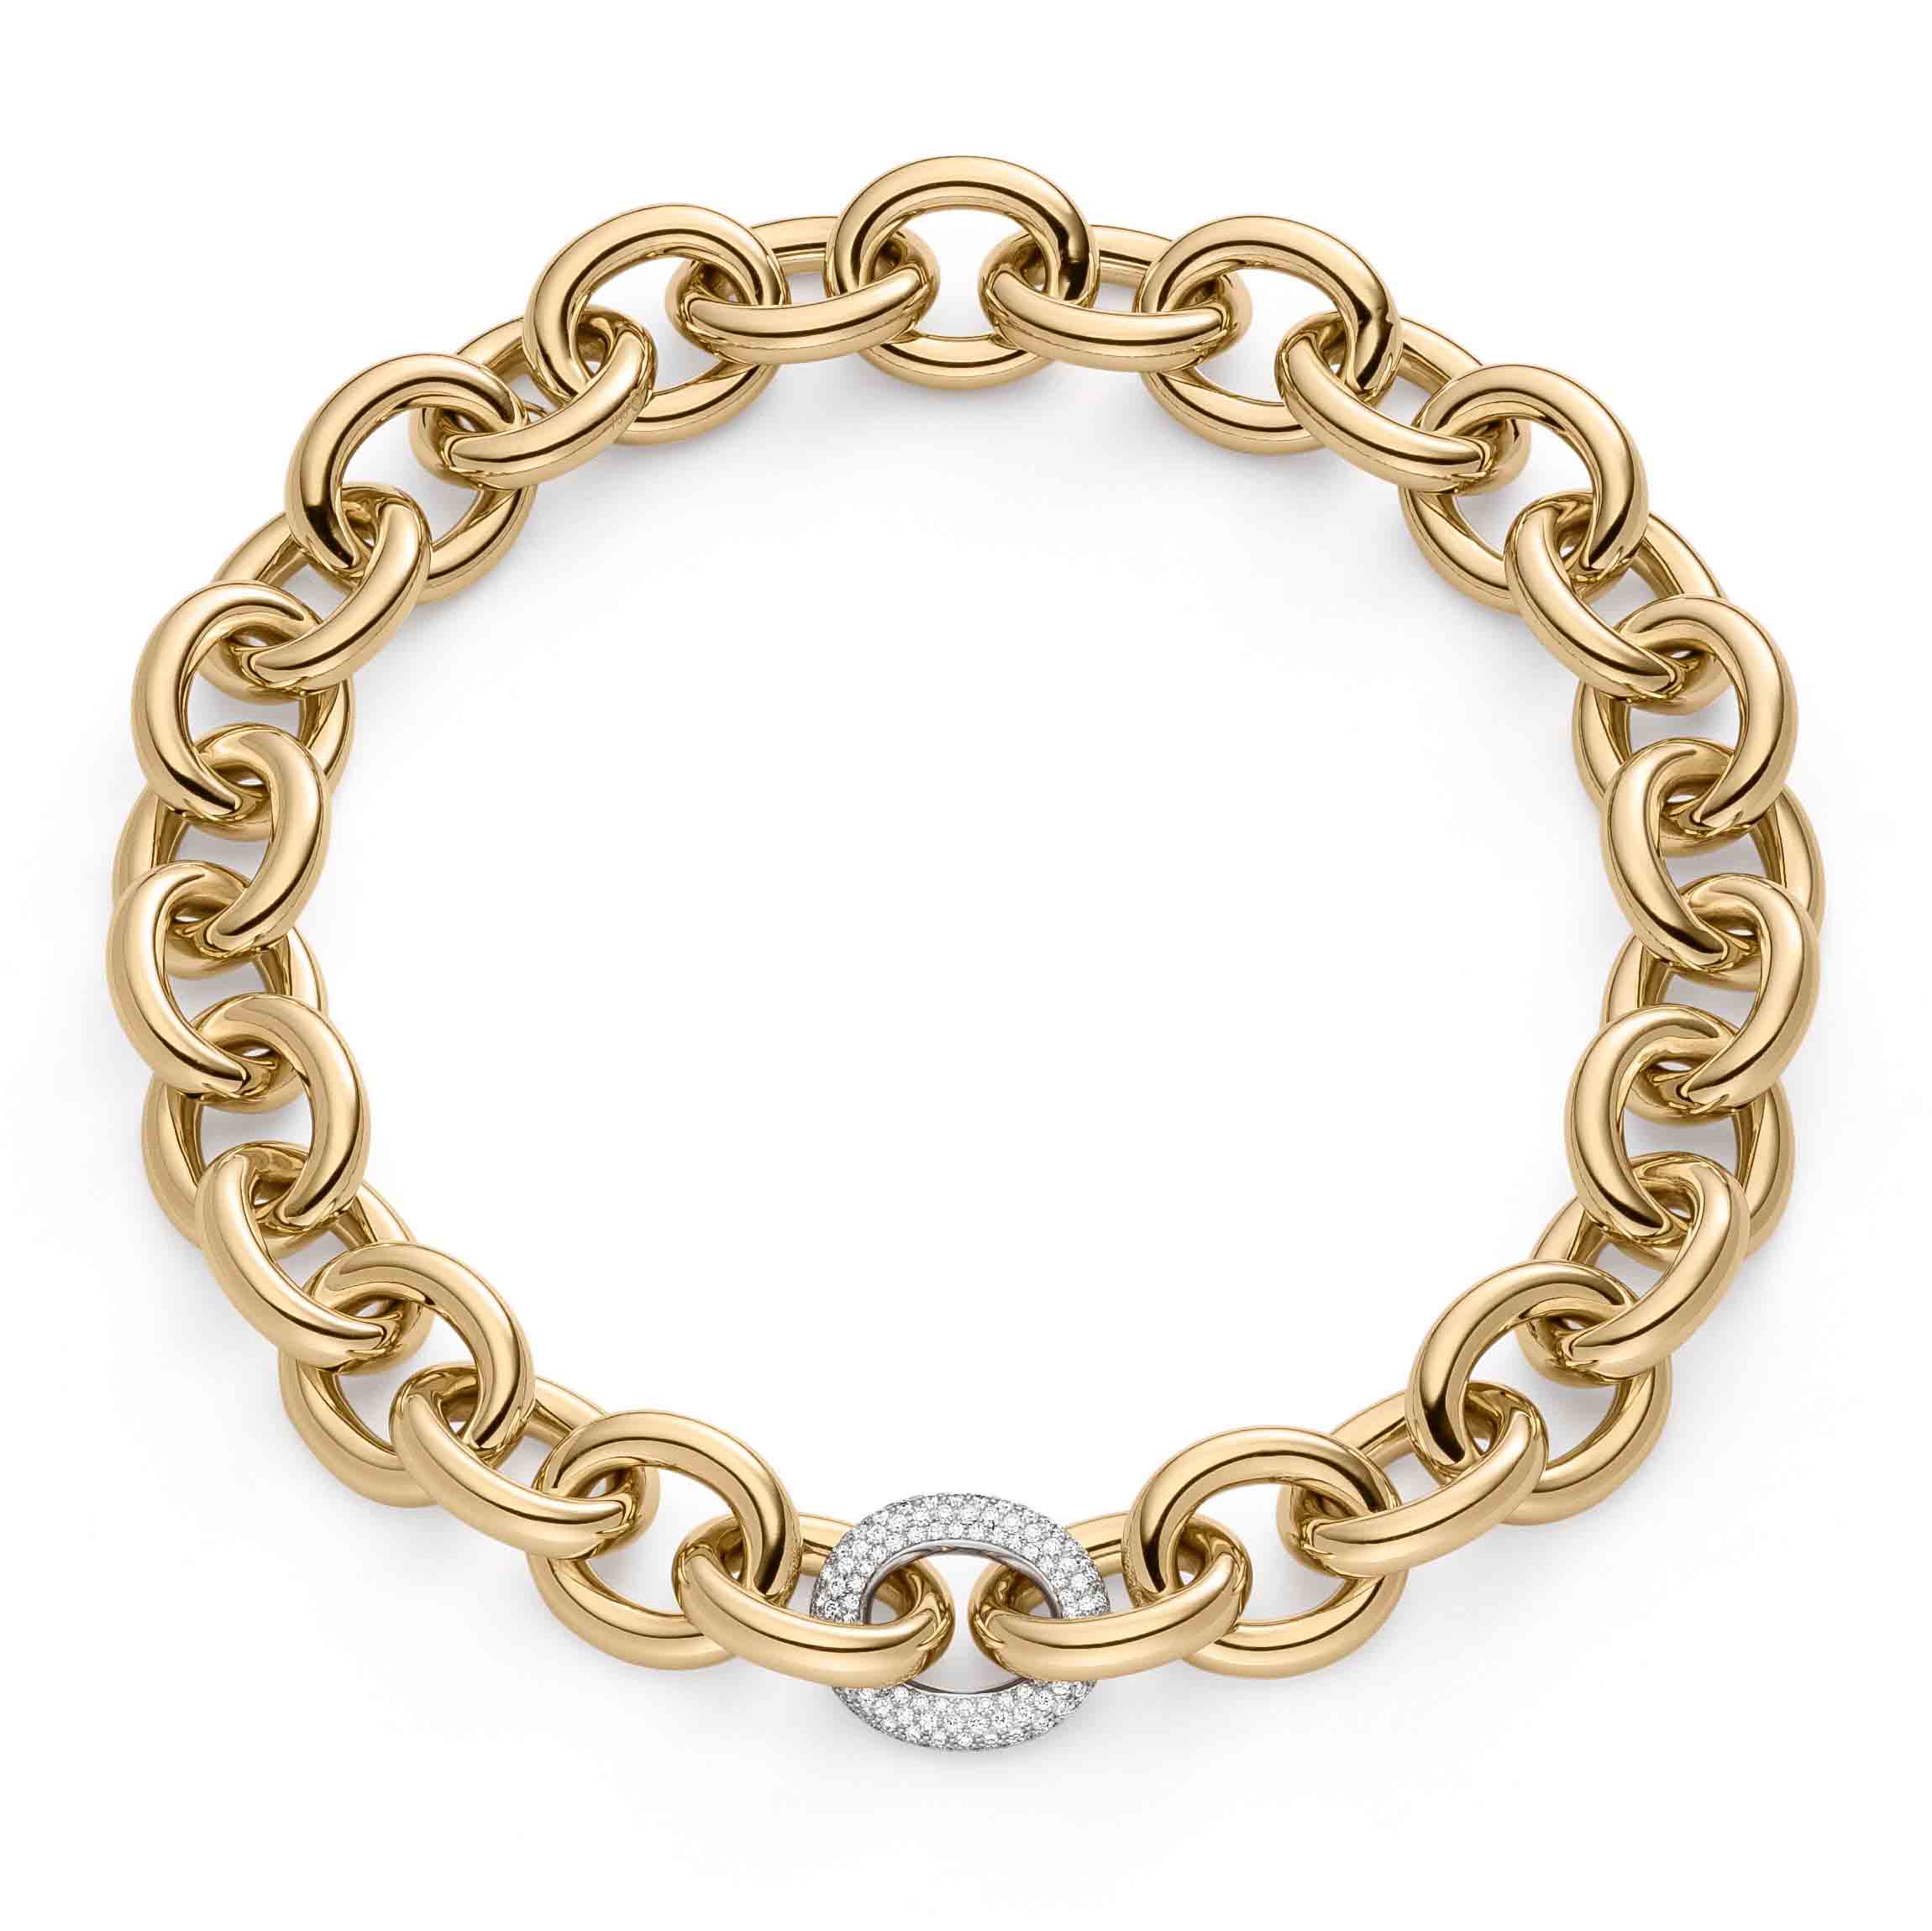 Fournisseurs de bracelets en argent de bijoux OEM/ODM en gros, bijoux plaqués or 18 carats OEM